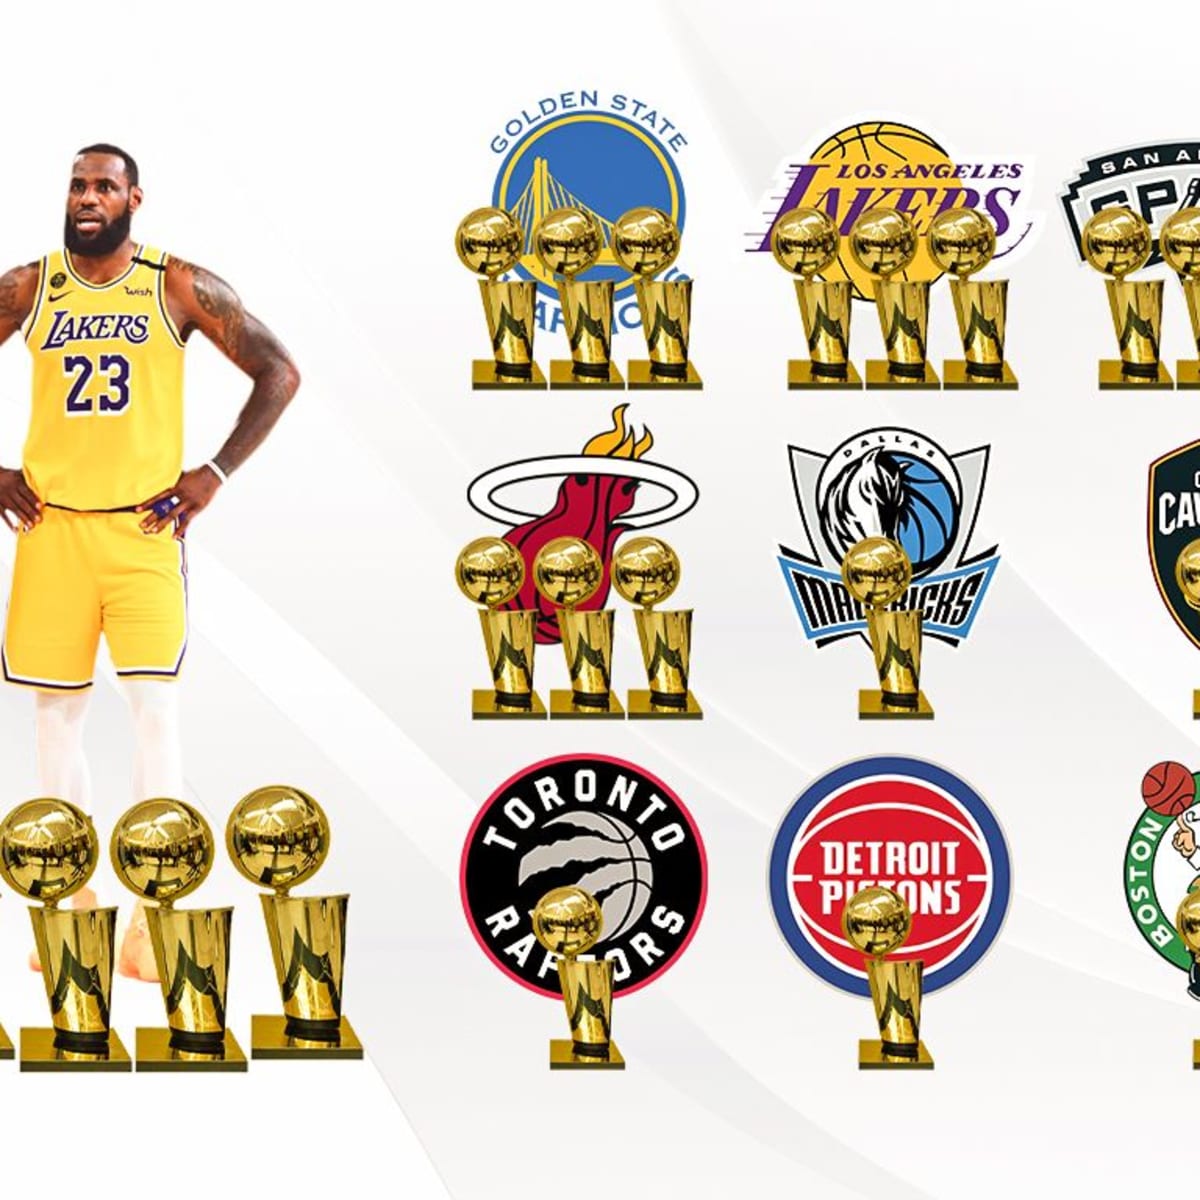 LeBron James, Lakers win NBA title